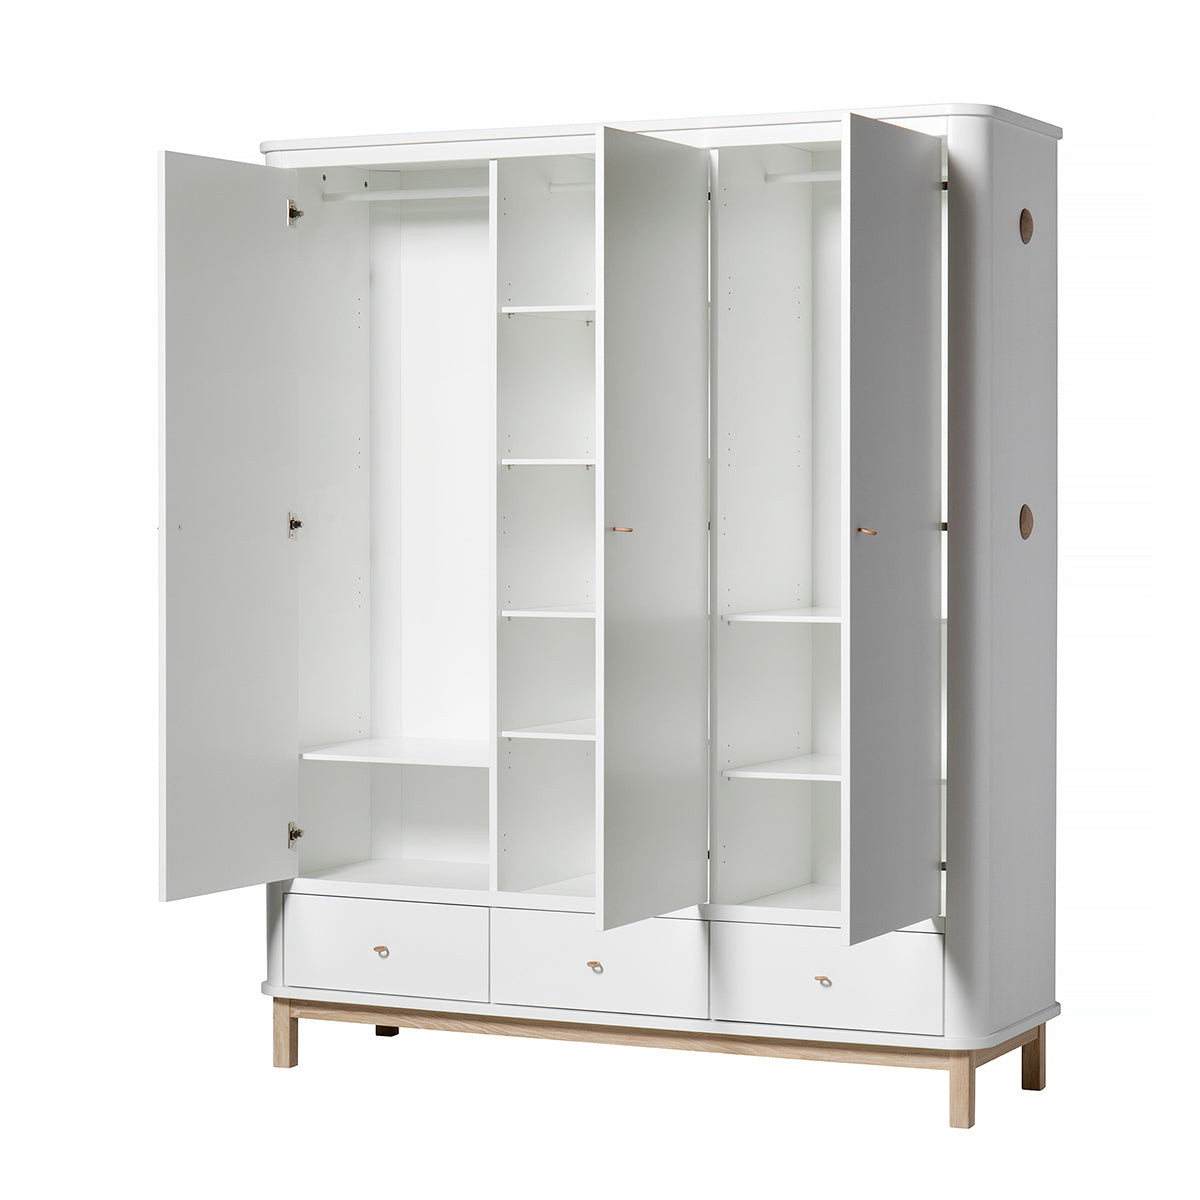 Oliver Furniture Wood Collection wardrobe, 3 doors, white/oak